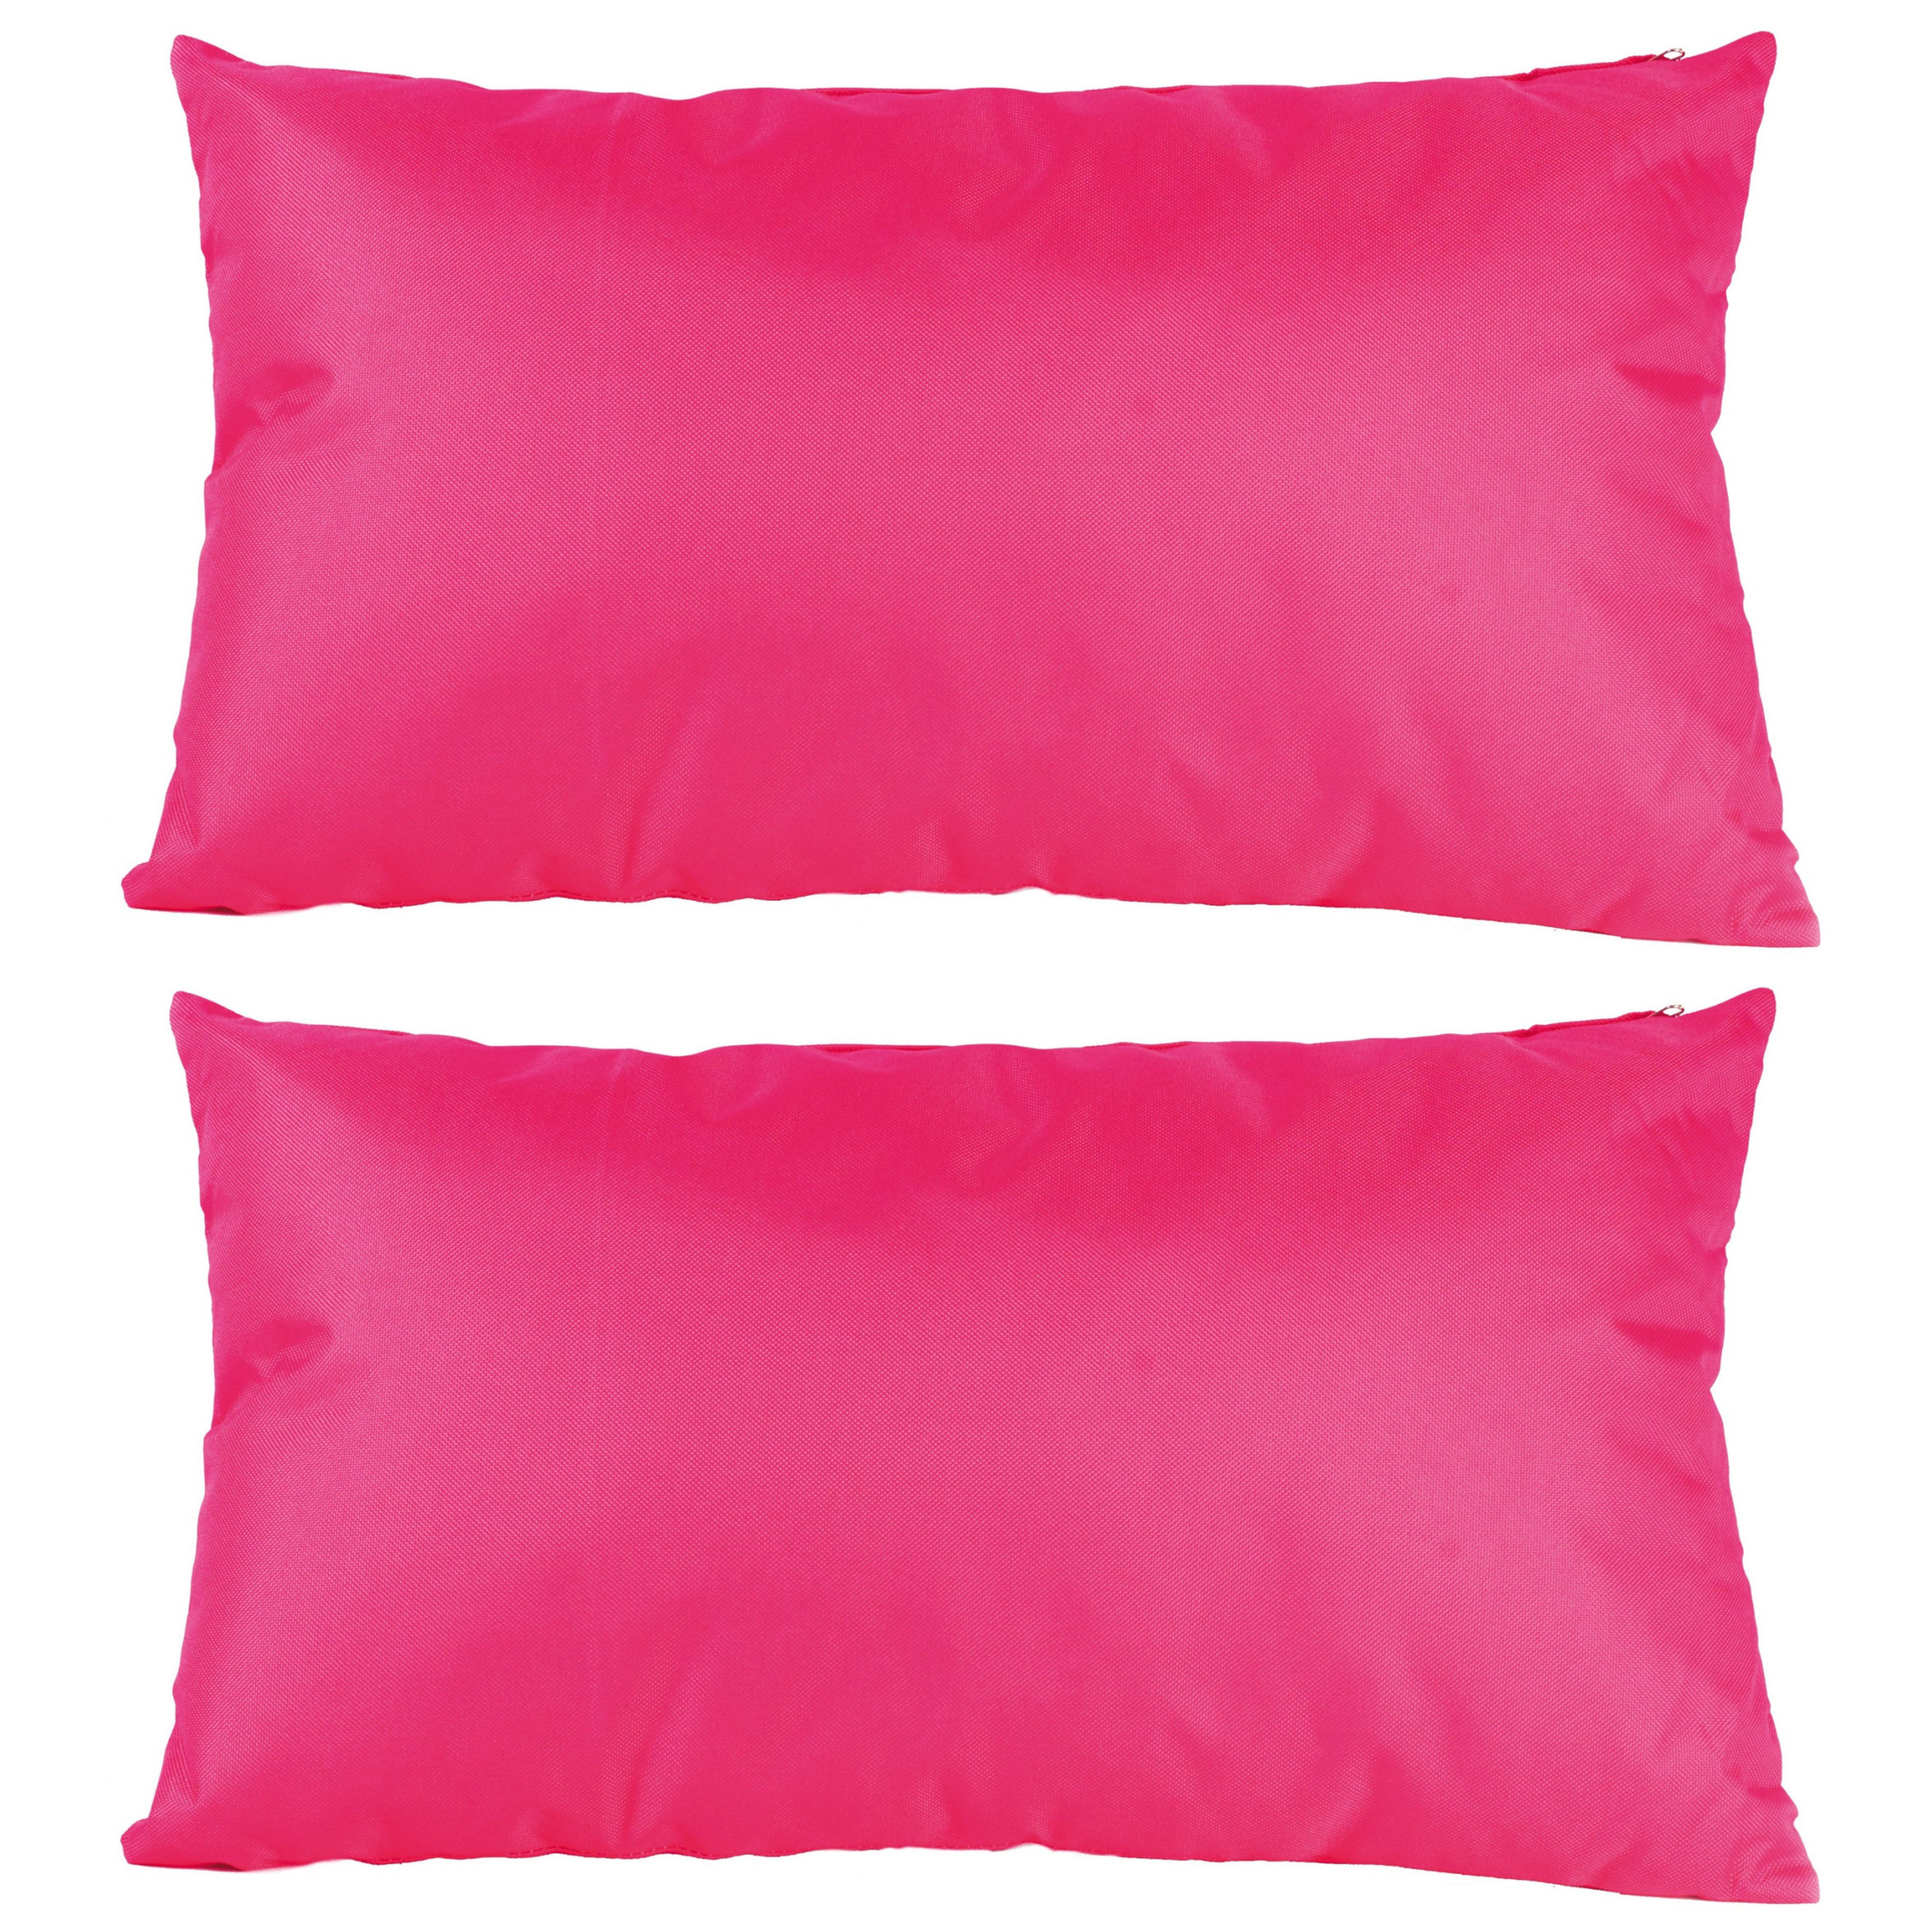 2x Bank-sier kussens voor binnen en buiten in de kleur fuchsia roze 30 x 50 cm